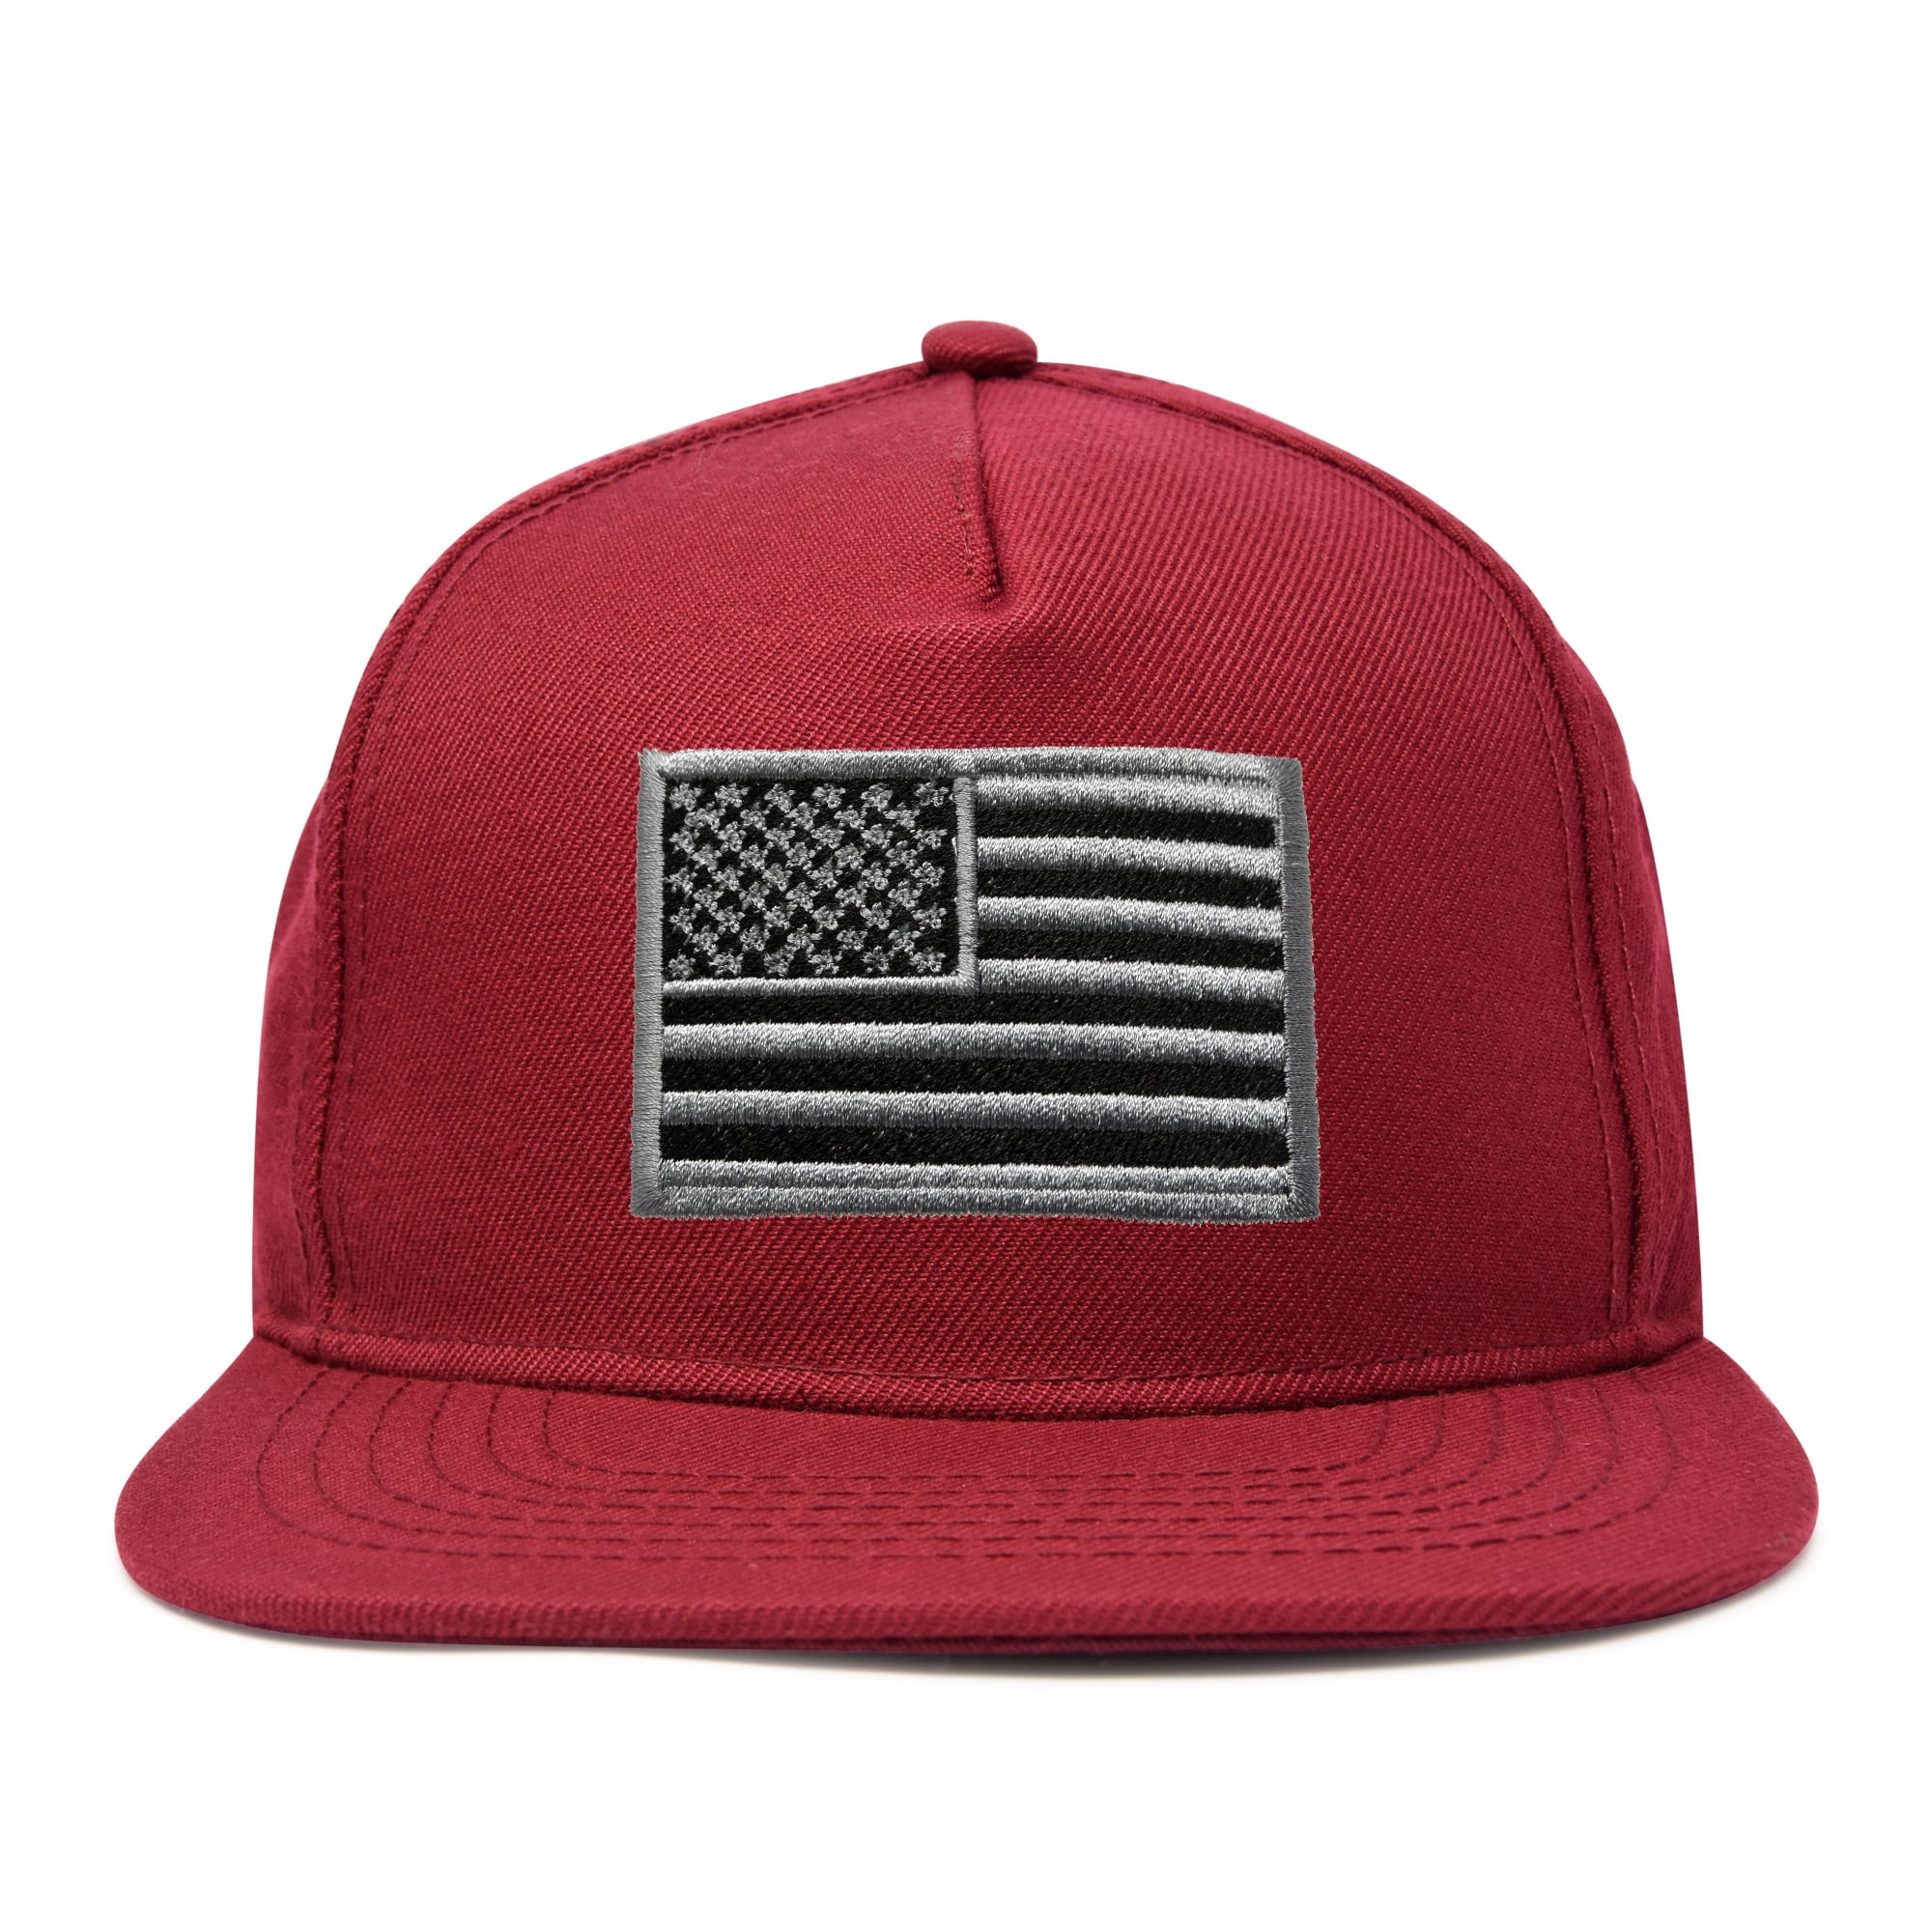 Nothing Nowhere USA Eagle Flag Patriotic Curve Bill Baseball Snapback Hat Cap 